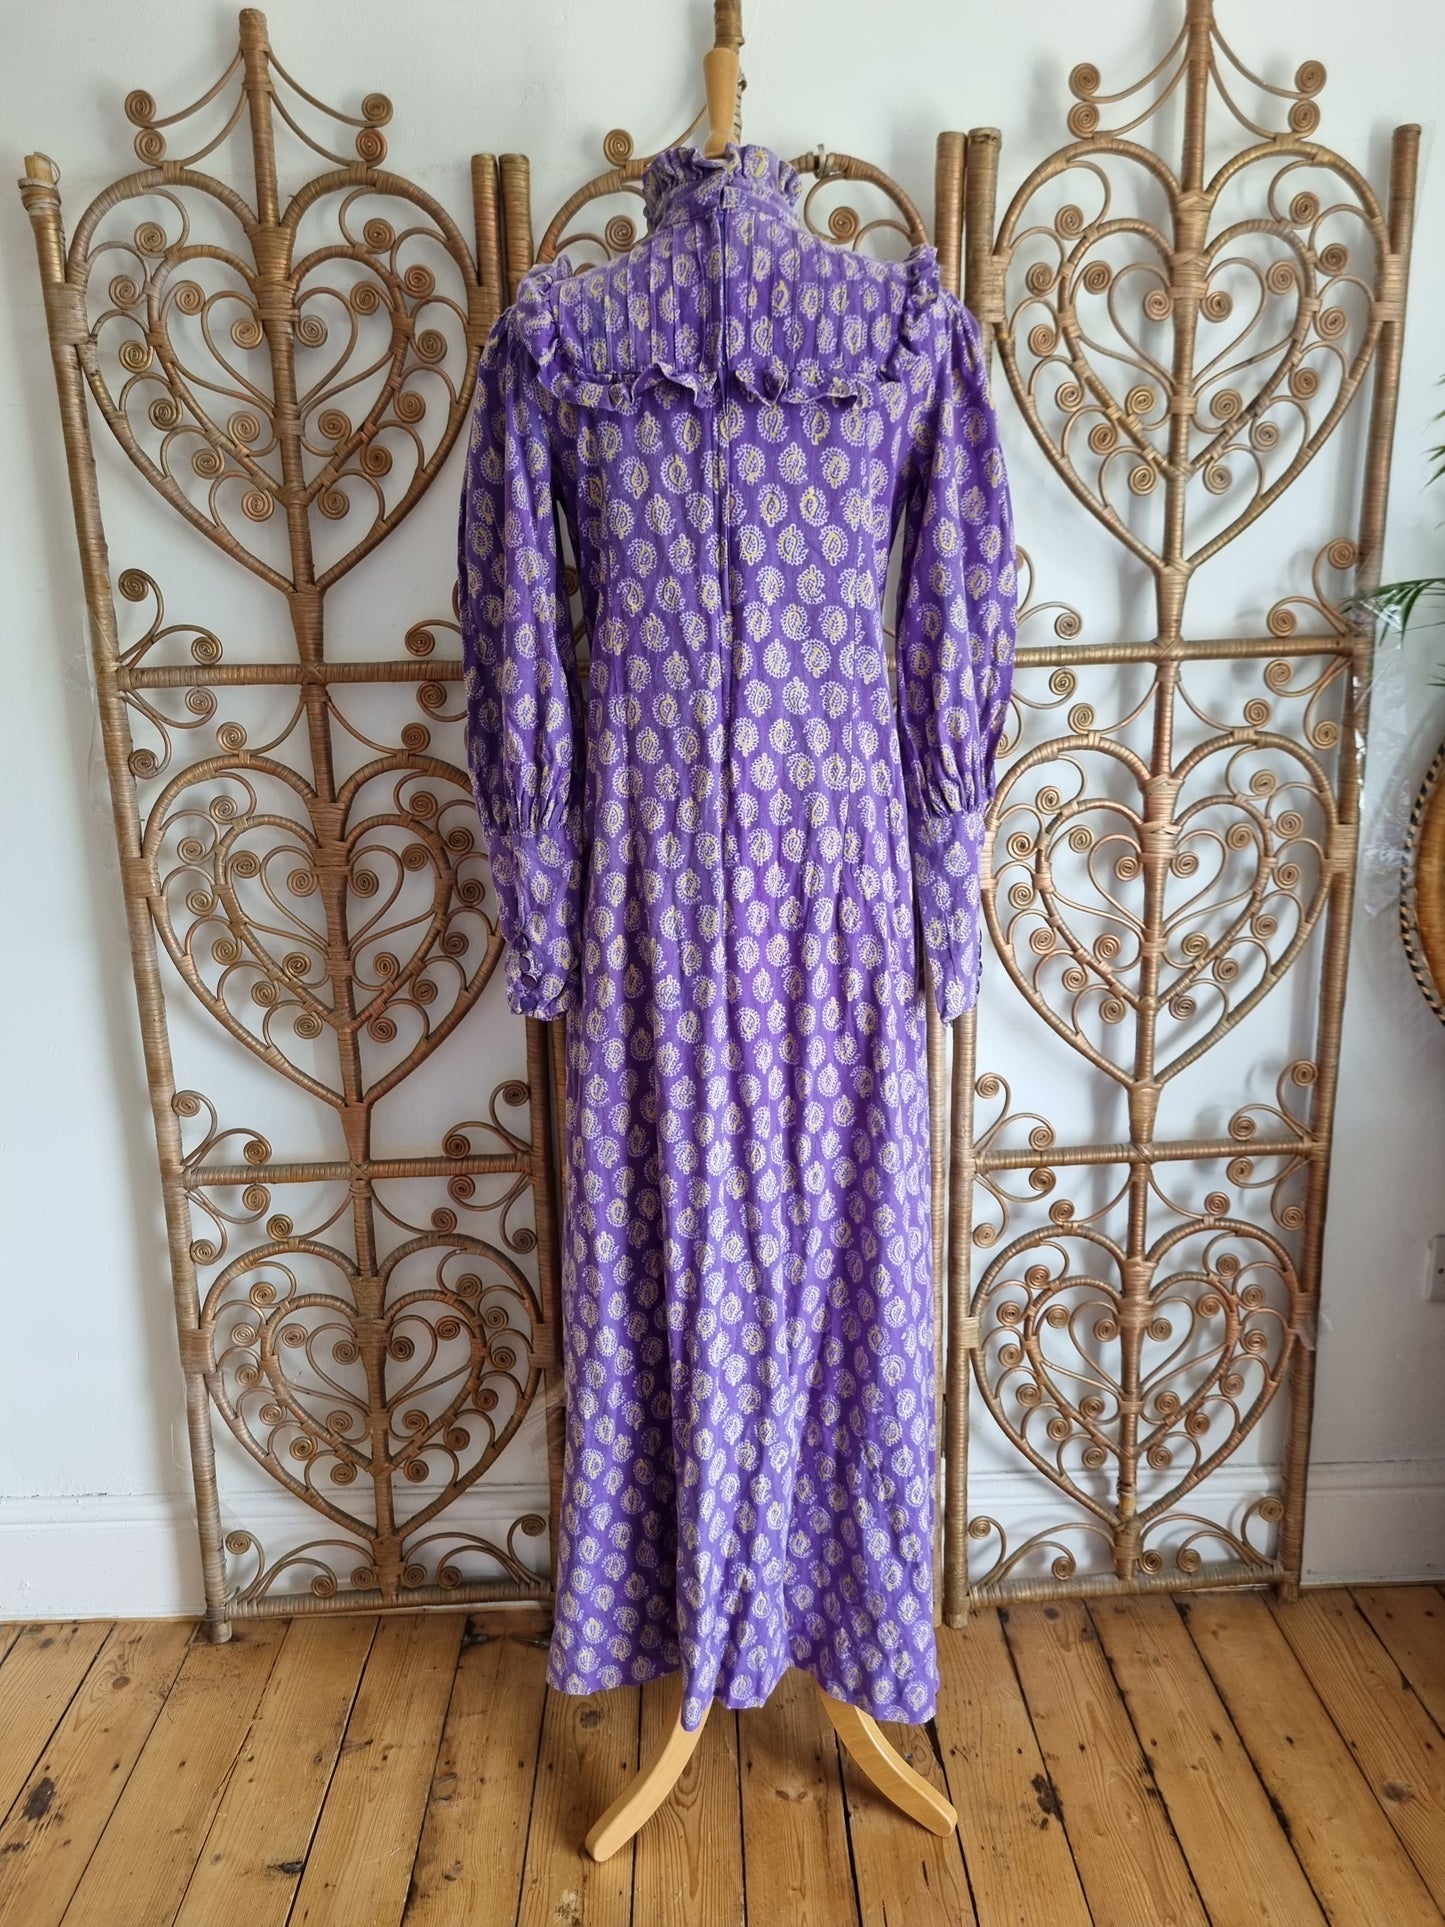 Vintage India Imports of Rhode Island maxi dress